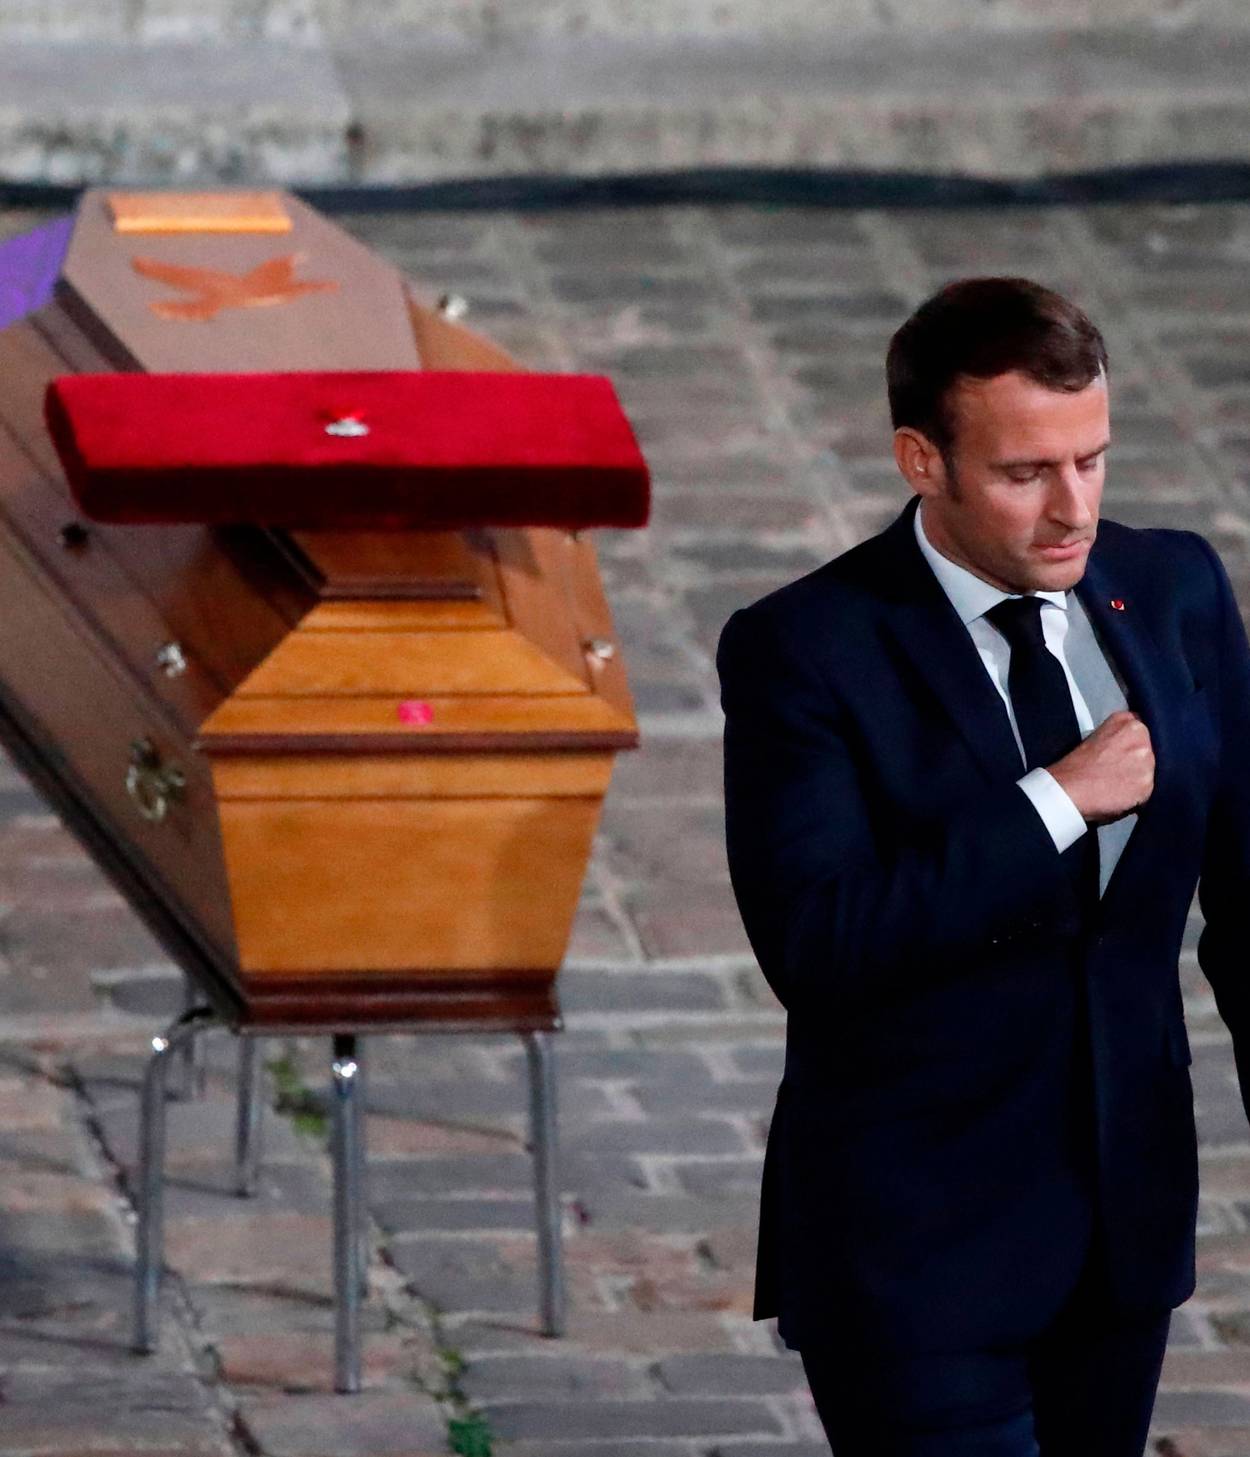 FRANCOIS MORI/POOL/AFP via Getty Images